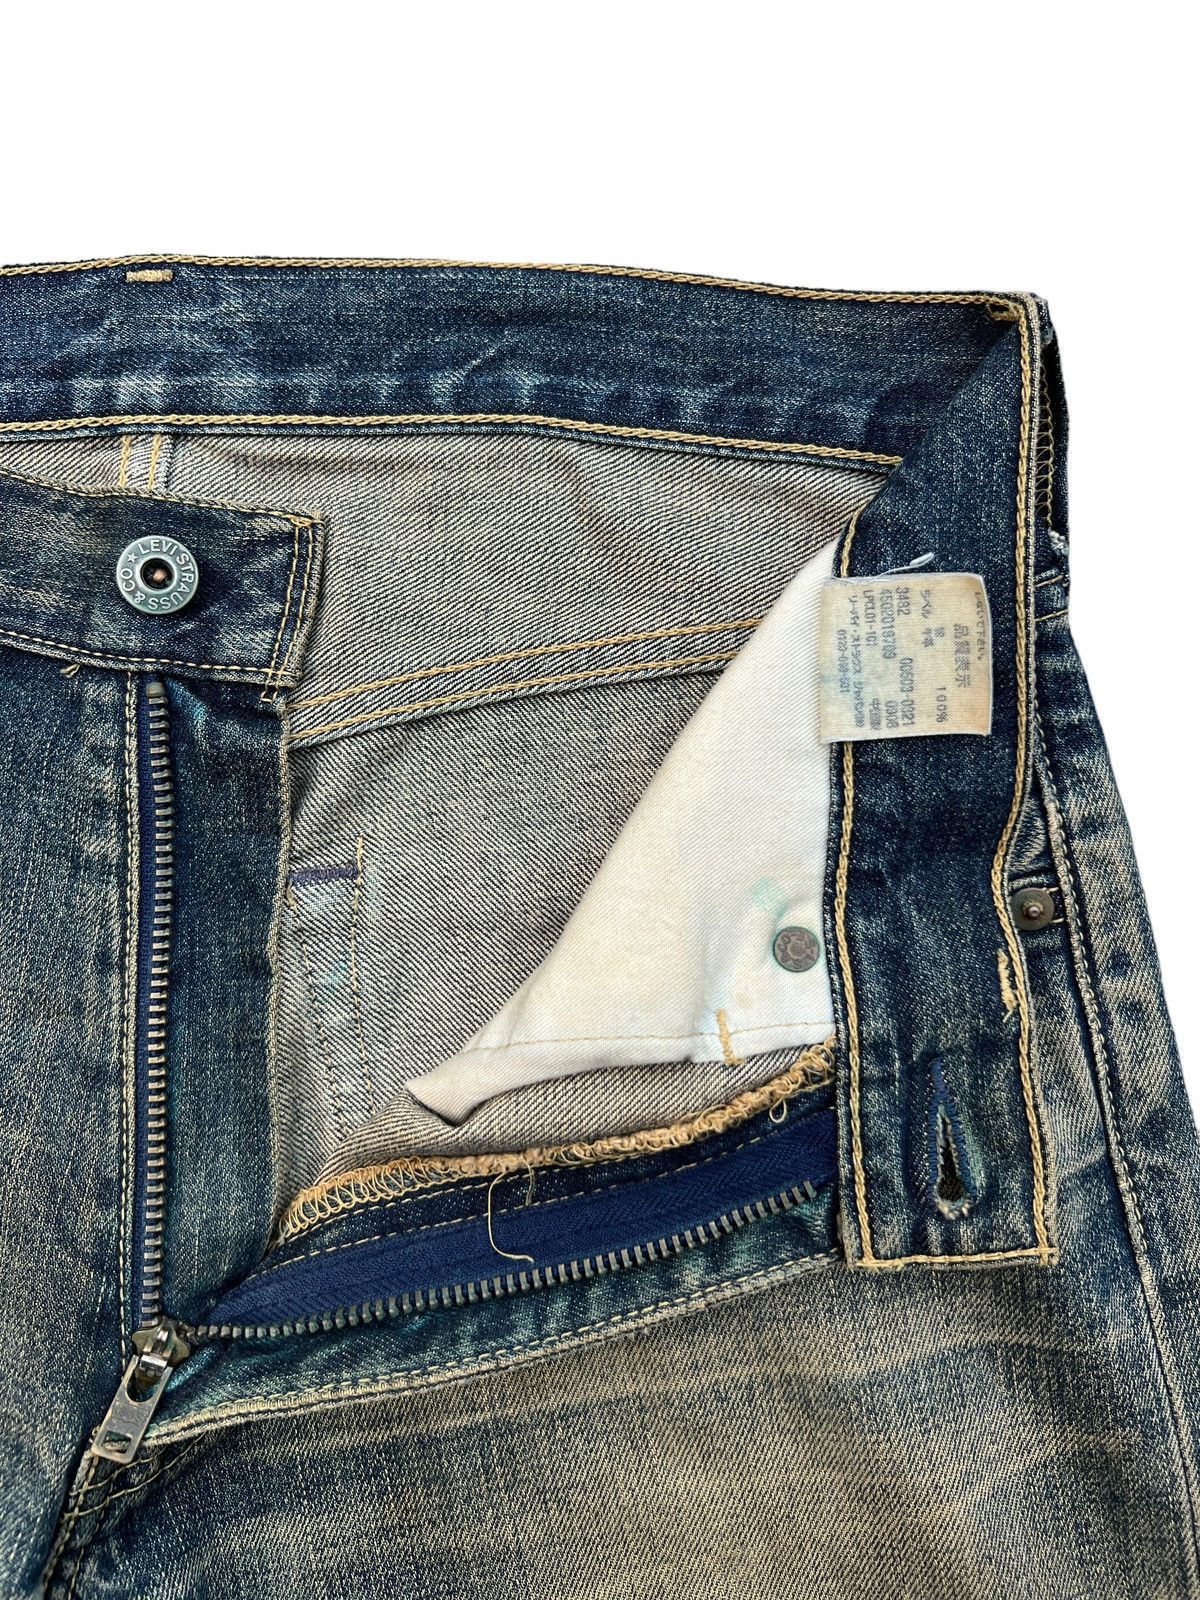 Vintage Levi’s 503 Distressed Rusty Denim Jeans 30x32 - 14